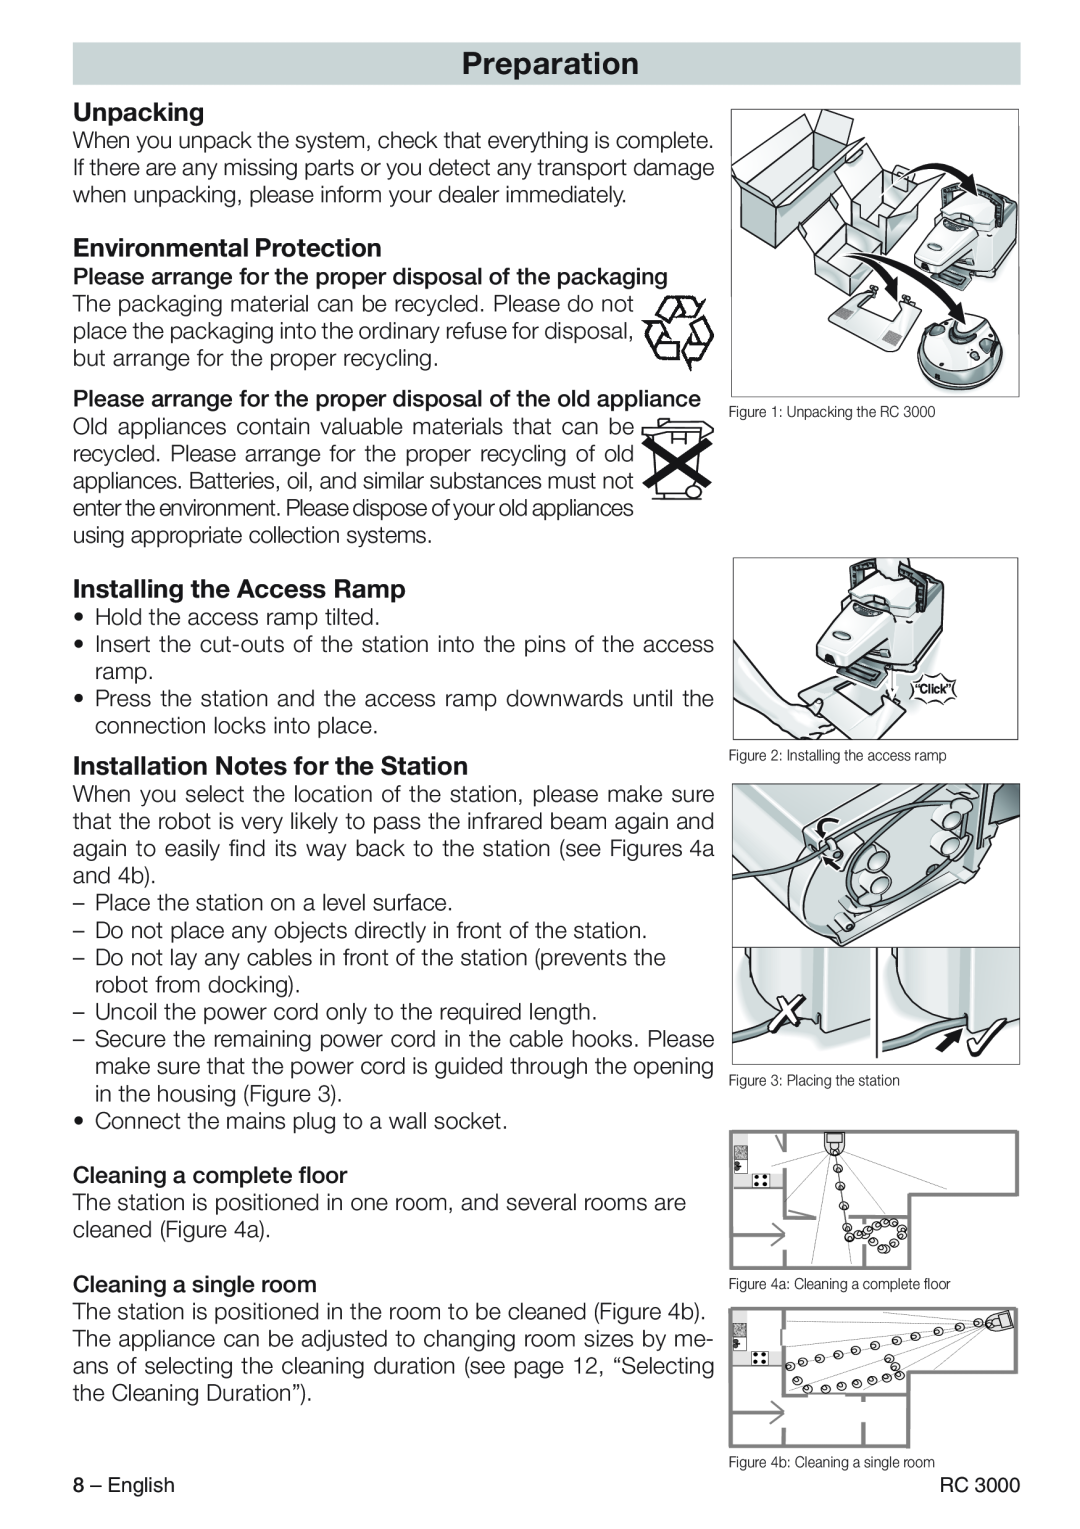 Karcher RC 3000 manual Preparation, Unpacking, Environmental Protection, Installing the Access Ramp 